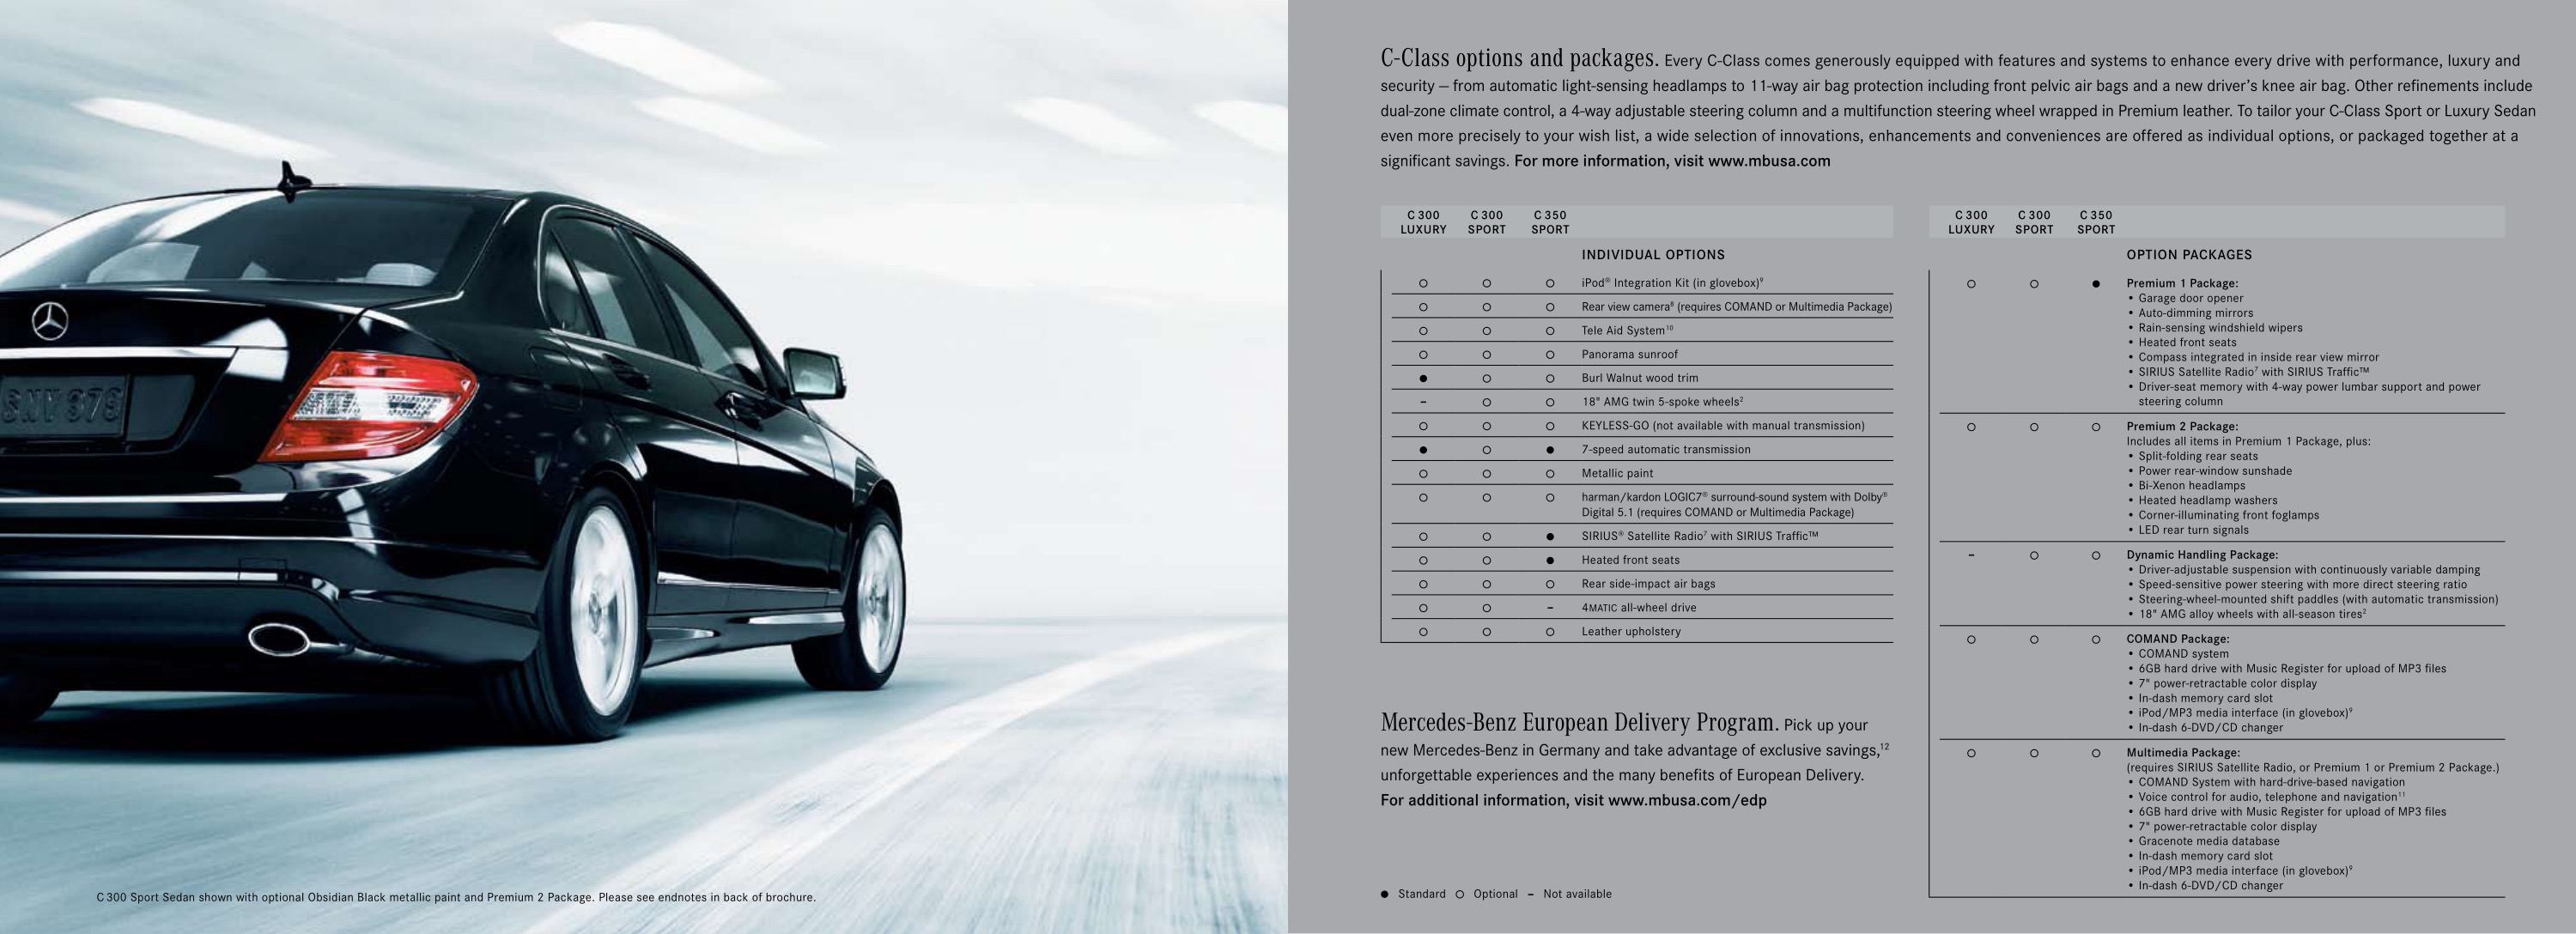 2010 Mercedes-Benz C-Class Brochure Page 4